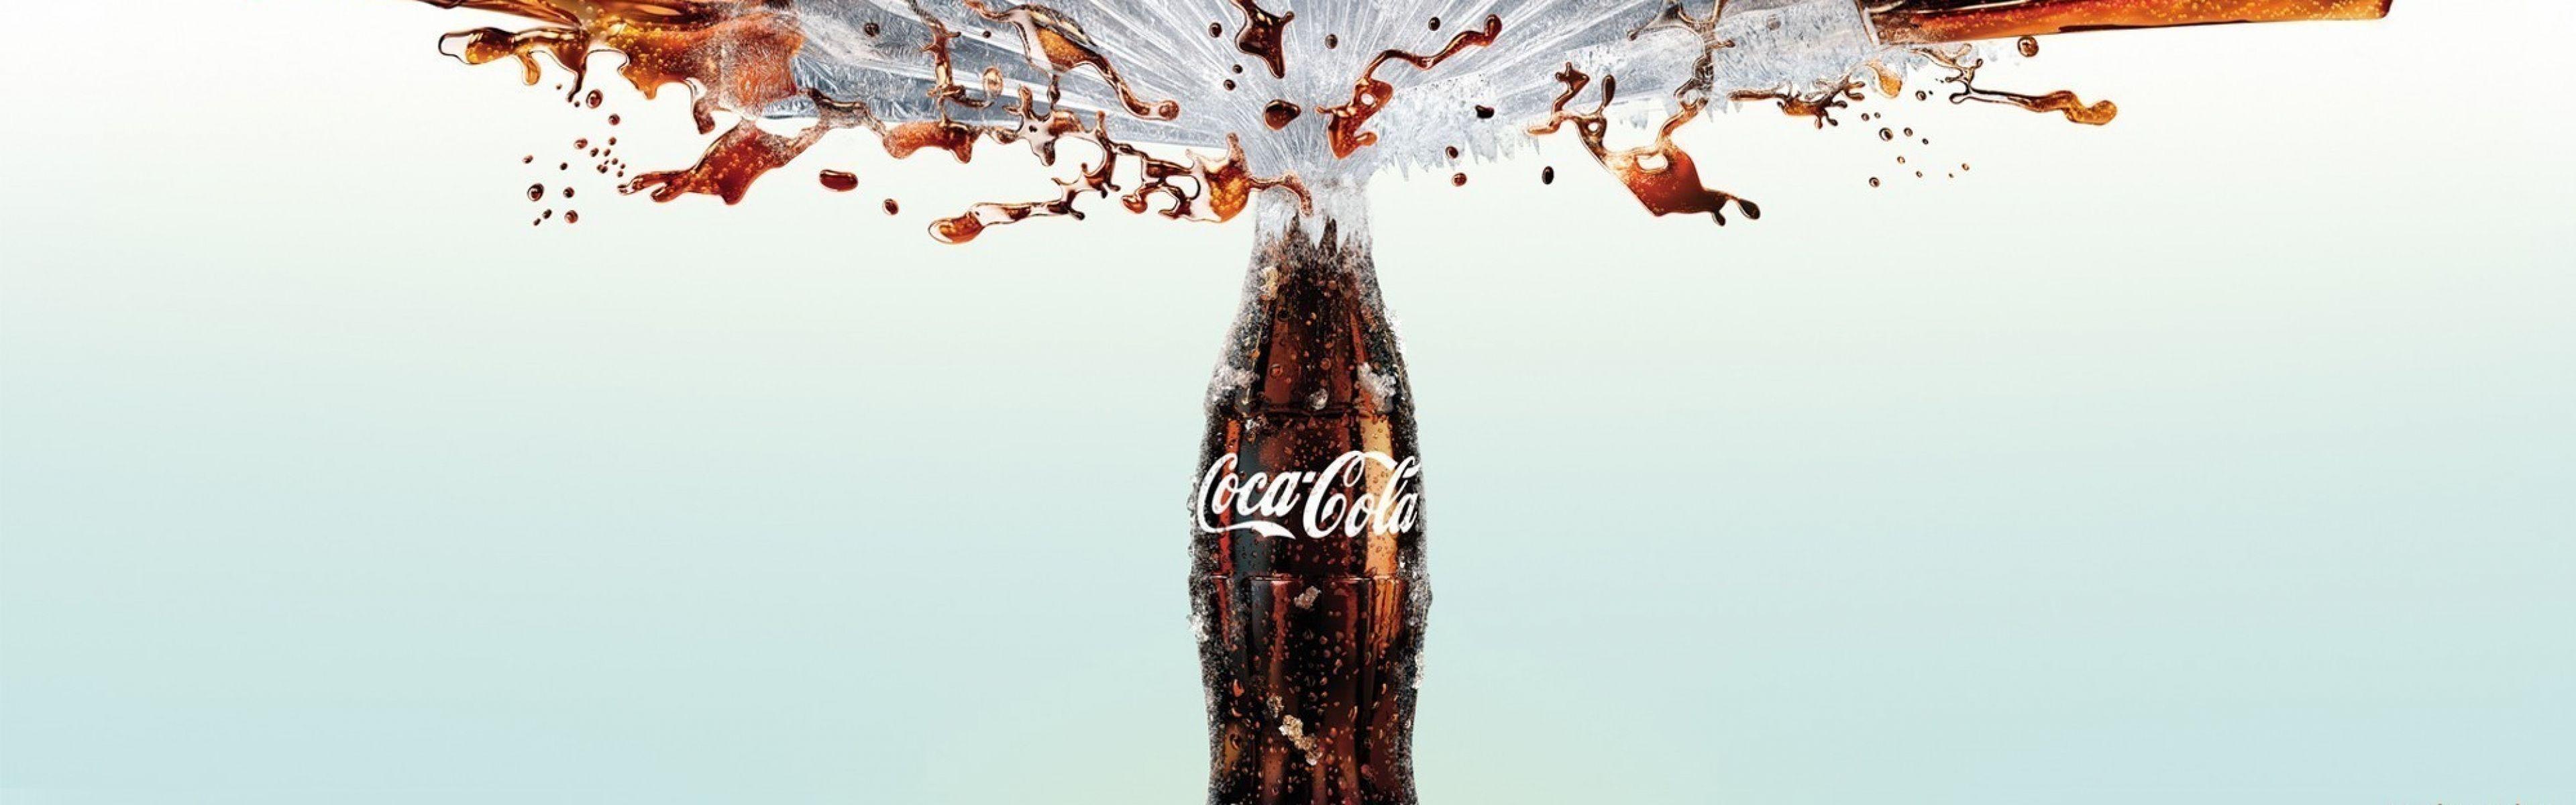 Coca Cola Bottle Wallpaper High Quality HD 15390